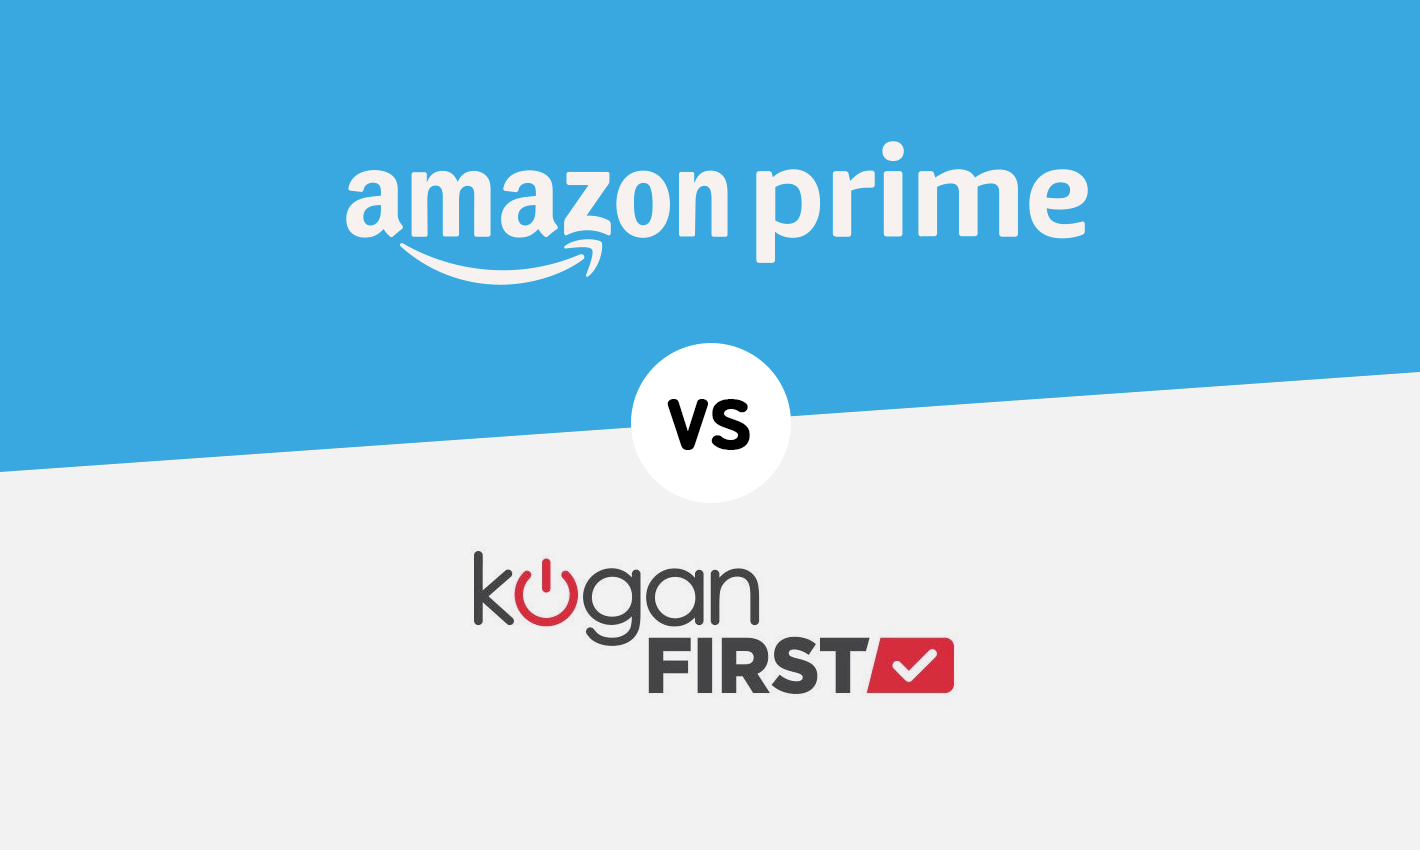 Amazon Prime vs. Kogan First